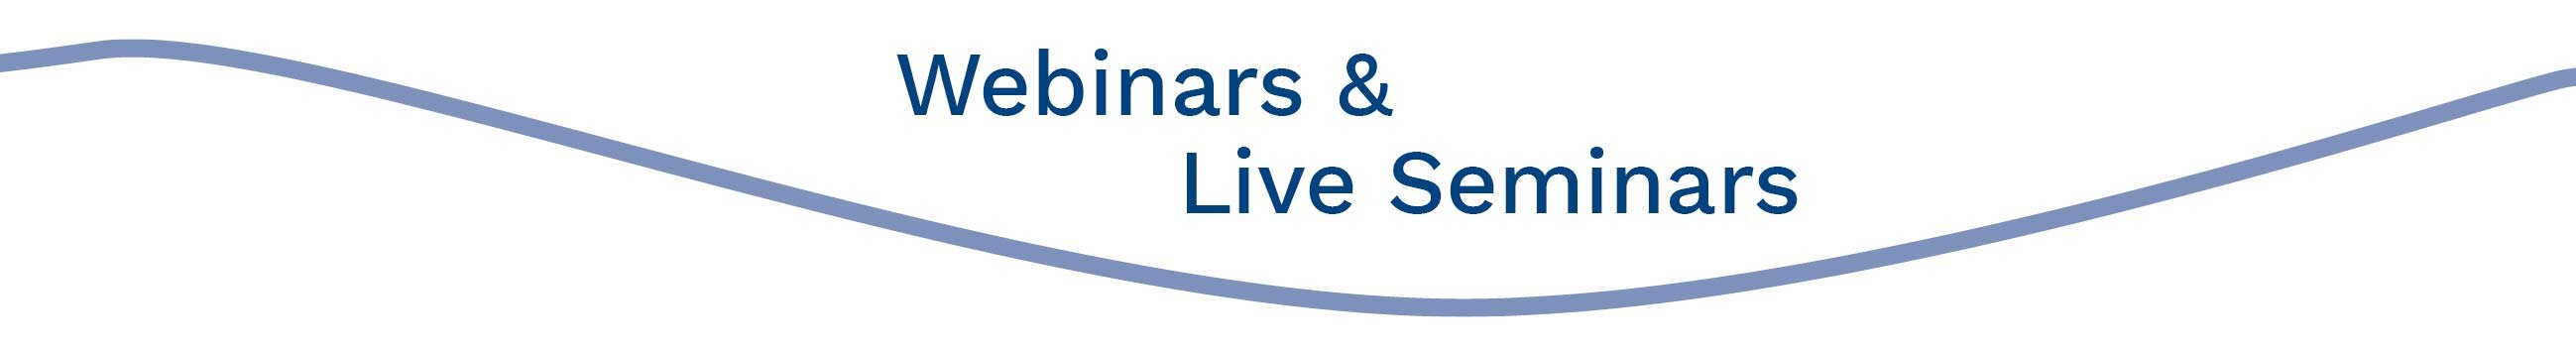 Webinars & Live Seminars